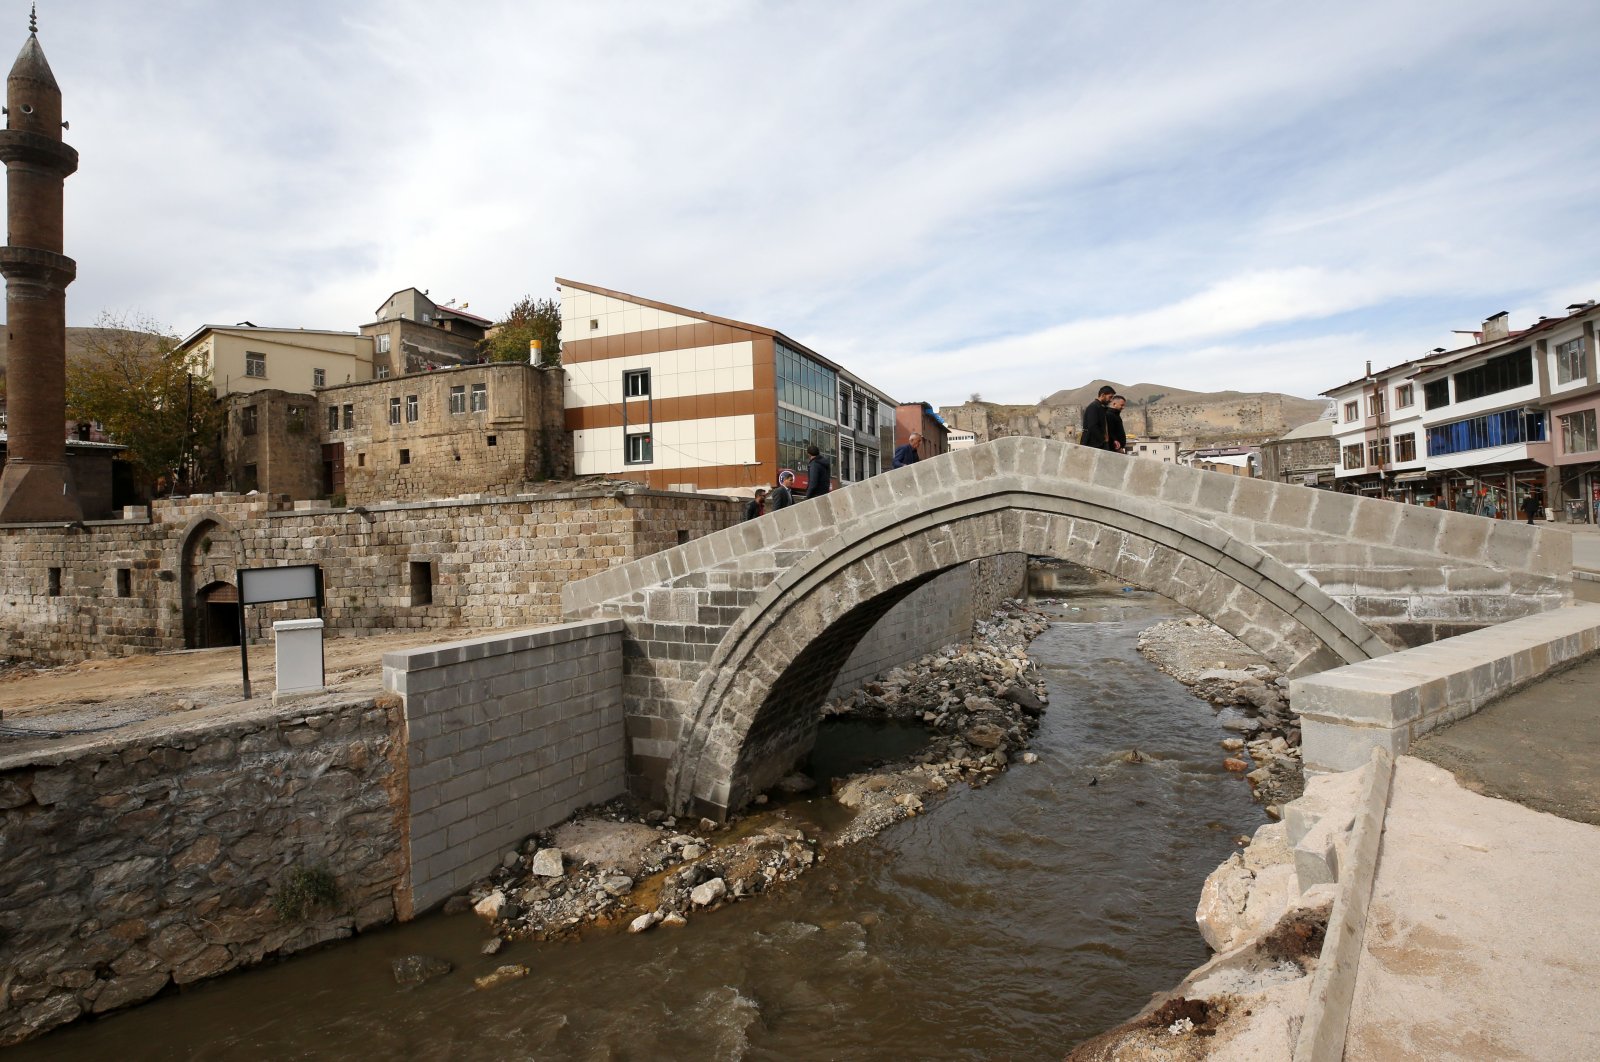 Jembatan bersejarah Bitlis yang berusia berabad-abad bersinar dengan restorasi